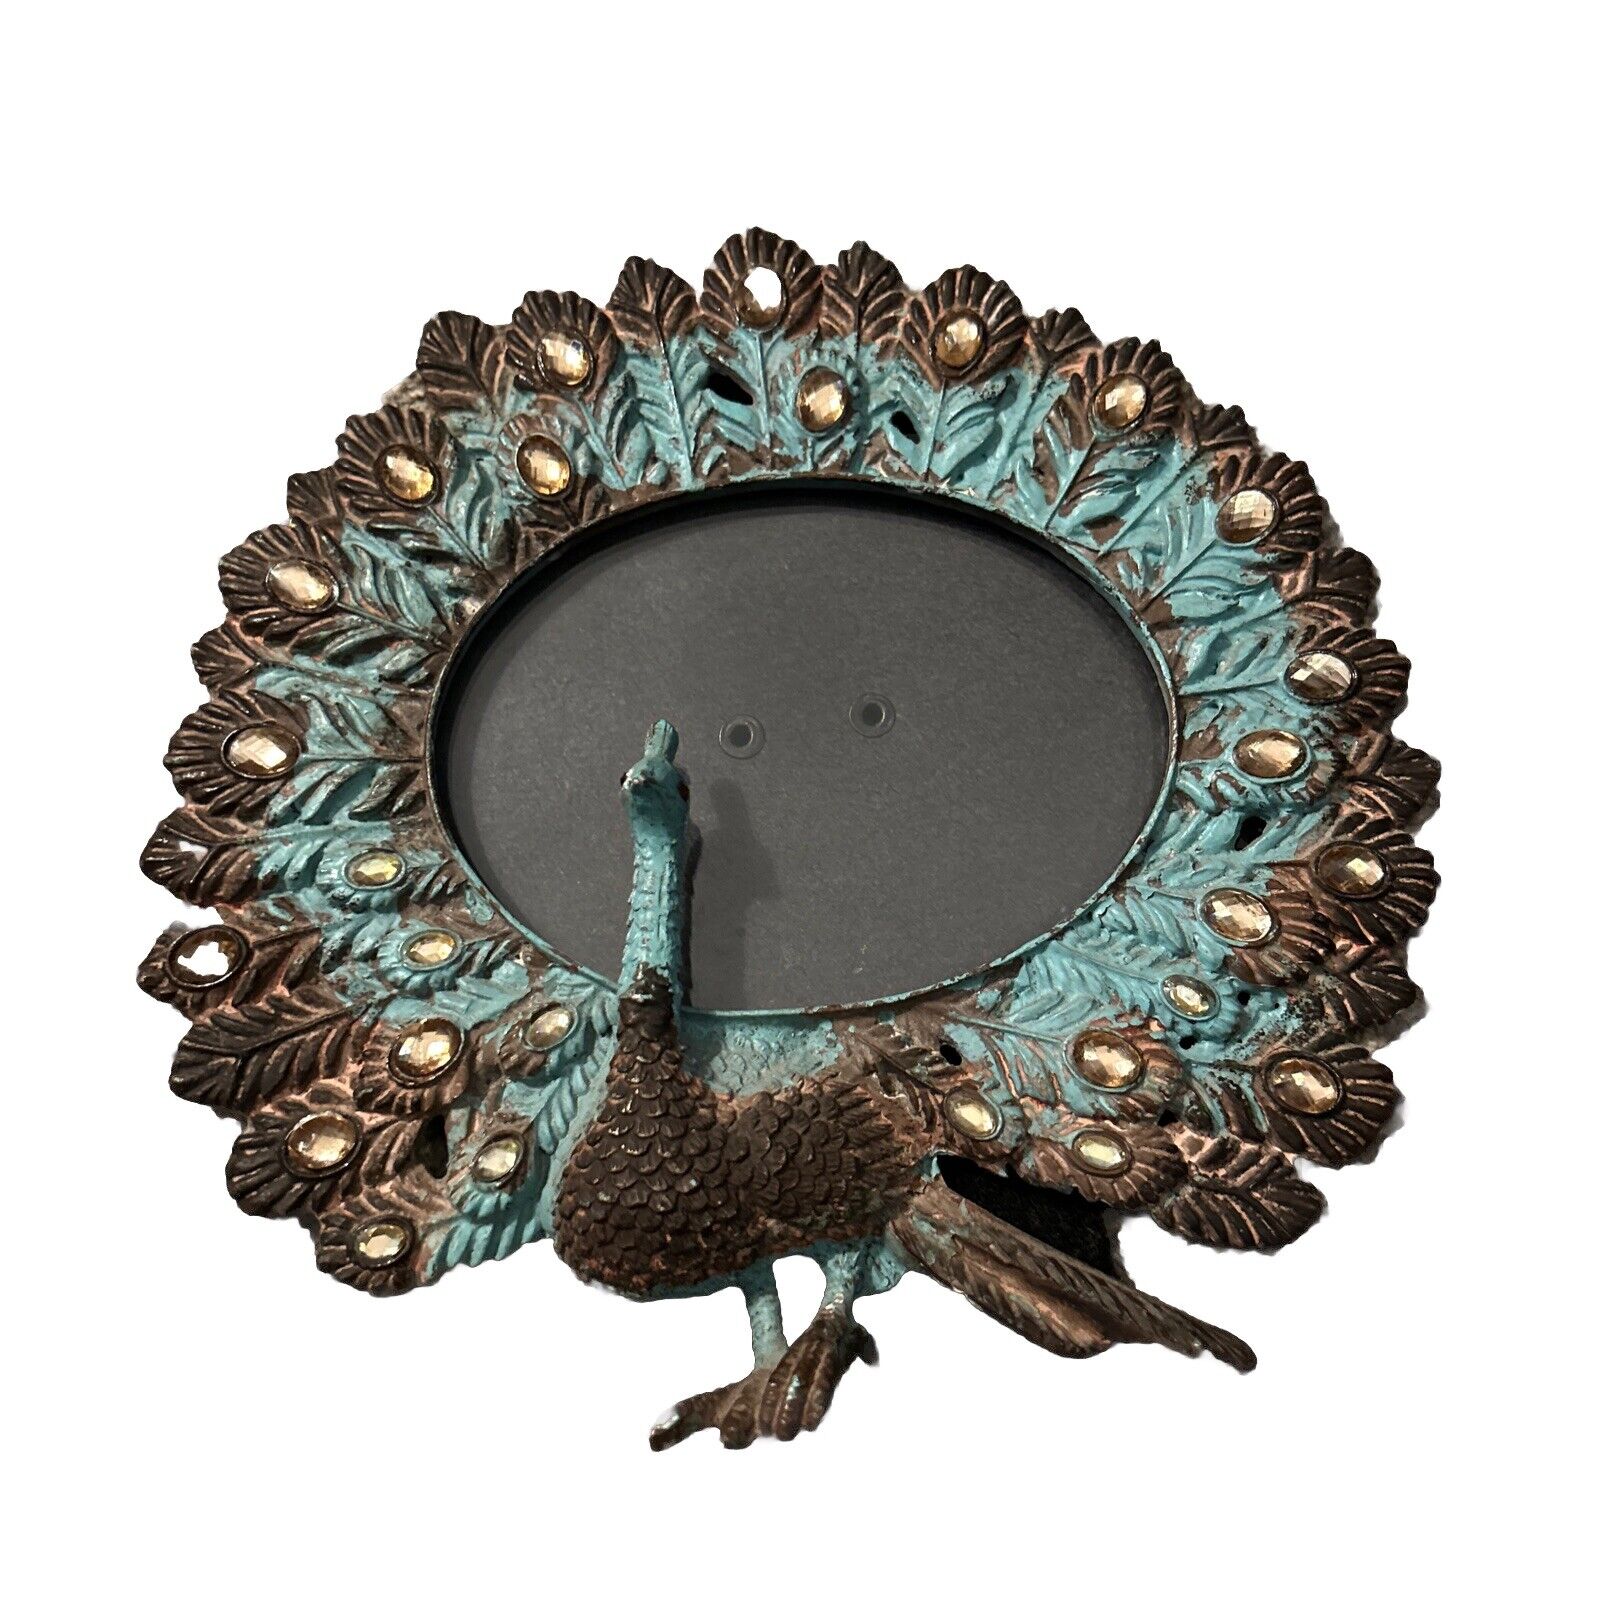 Peacock Picture Photo Frame Cast Iron Metal Rhinestone Jeweled Peacock